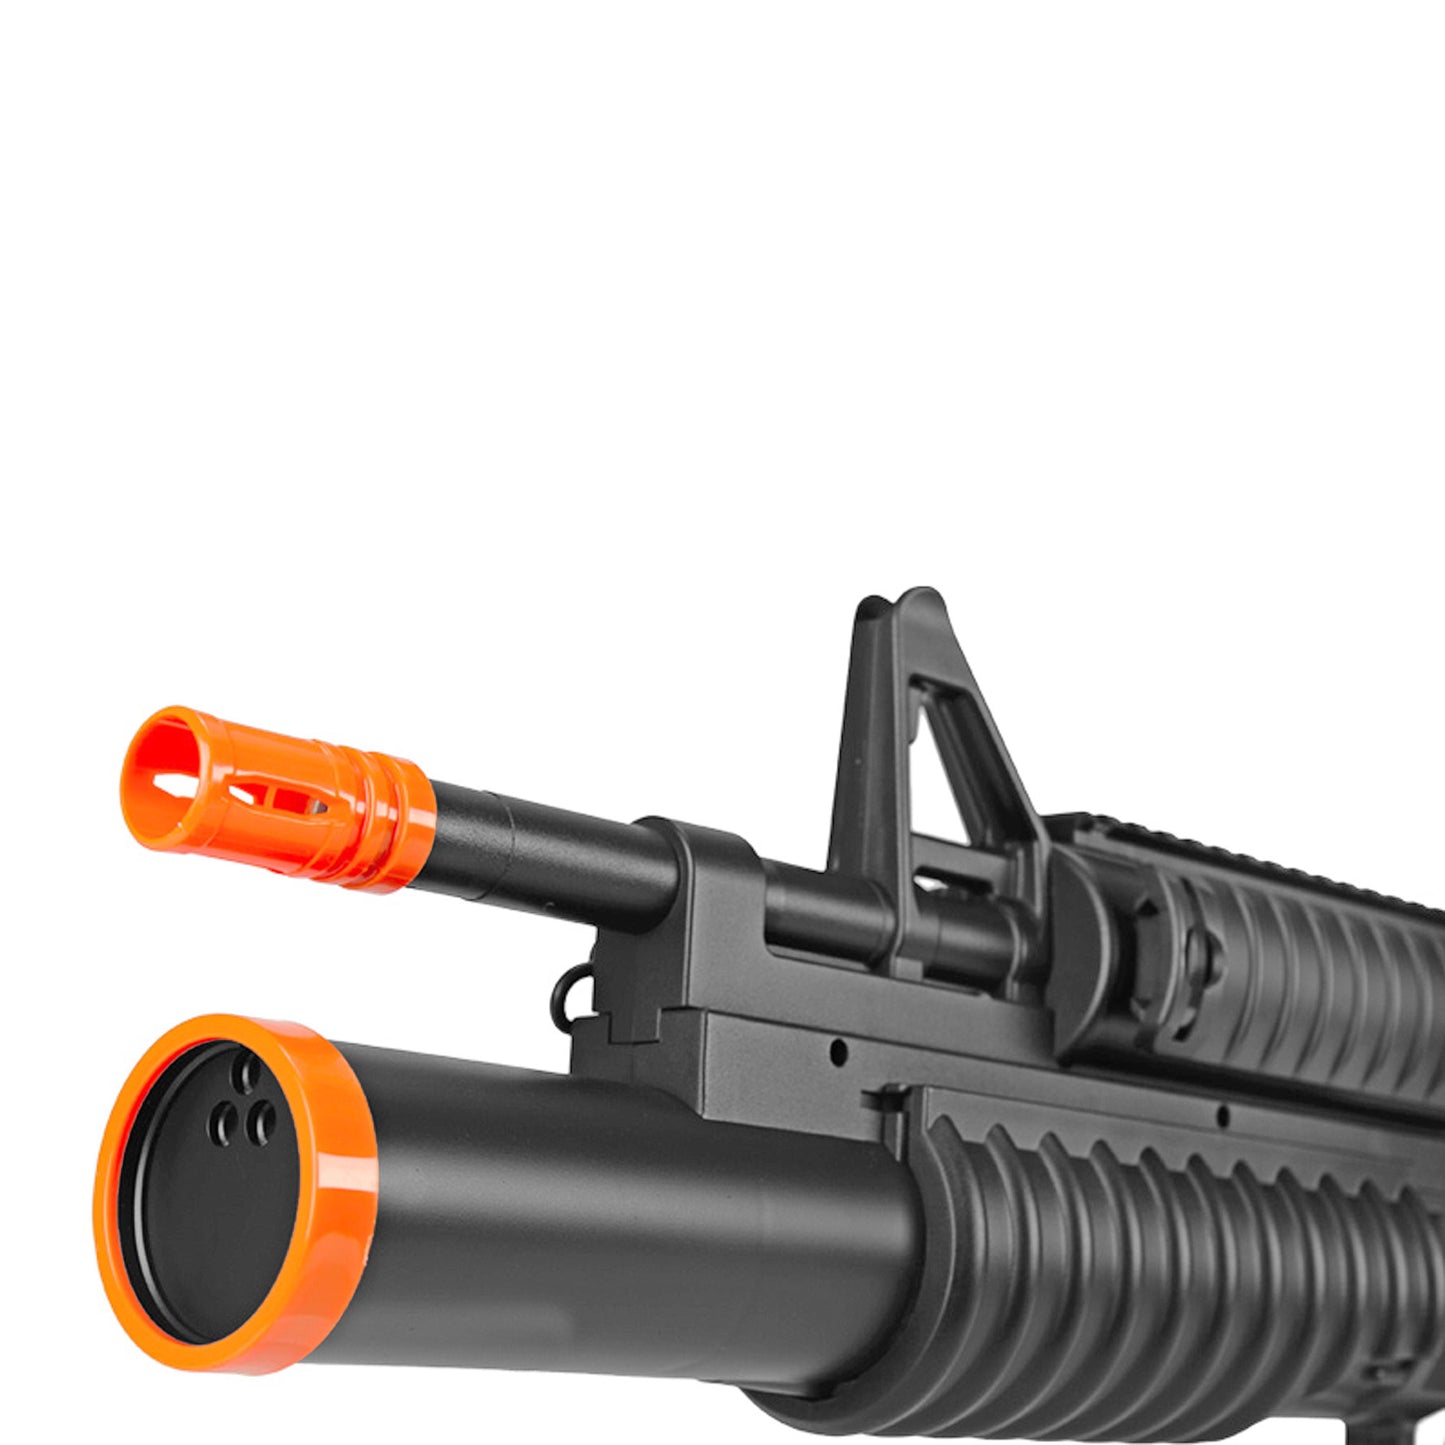 BBTac Airsoft Gun Electric Rifle Full Auto with Burst 3 Round Launcher, Rail System, Powerful AEG Shoot 6mm BBs